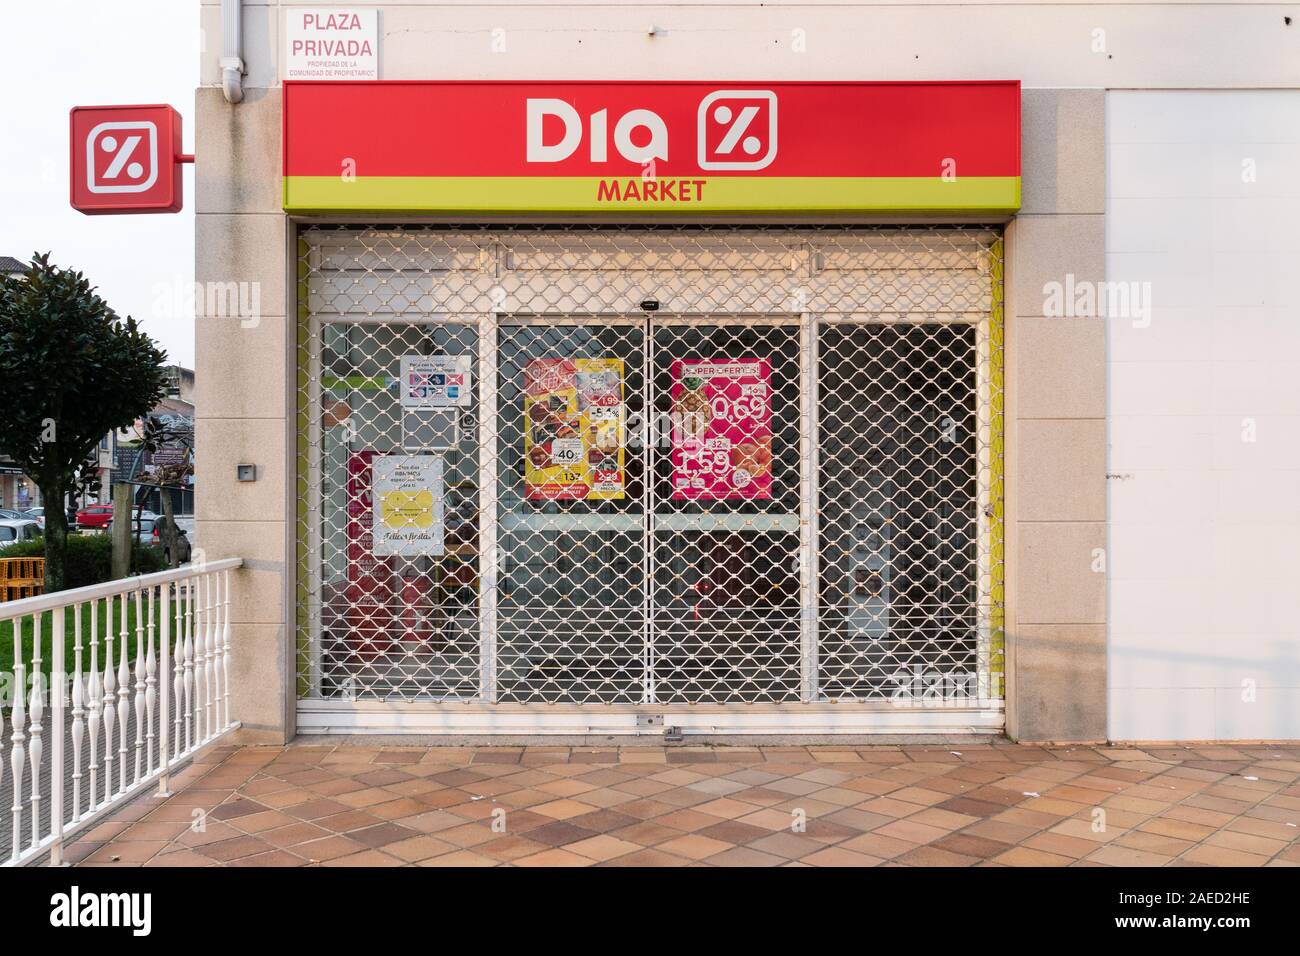 Santiago de Compostela, Spanien; 07. Dezember 2019: Dia-Fassade Store geschlossen. Supermarkt Franchise Store, Werbung und Logo Stockfoto